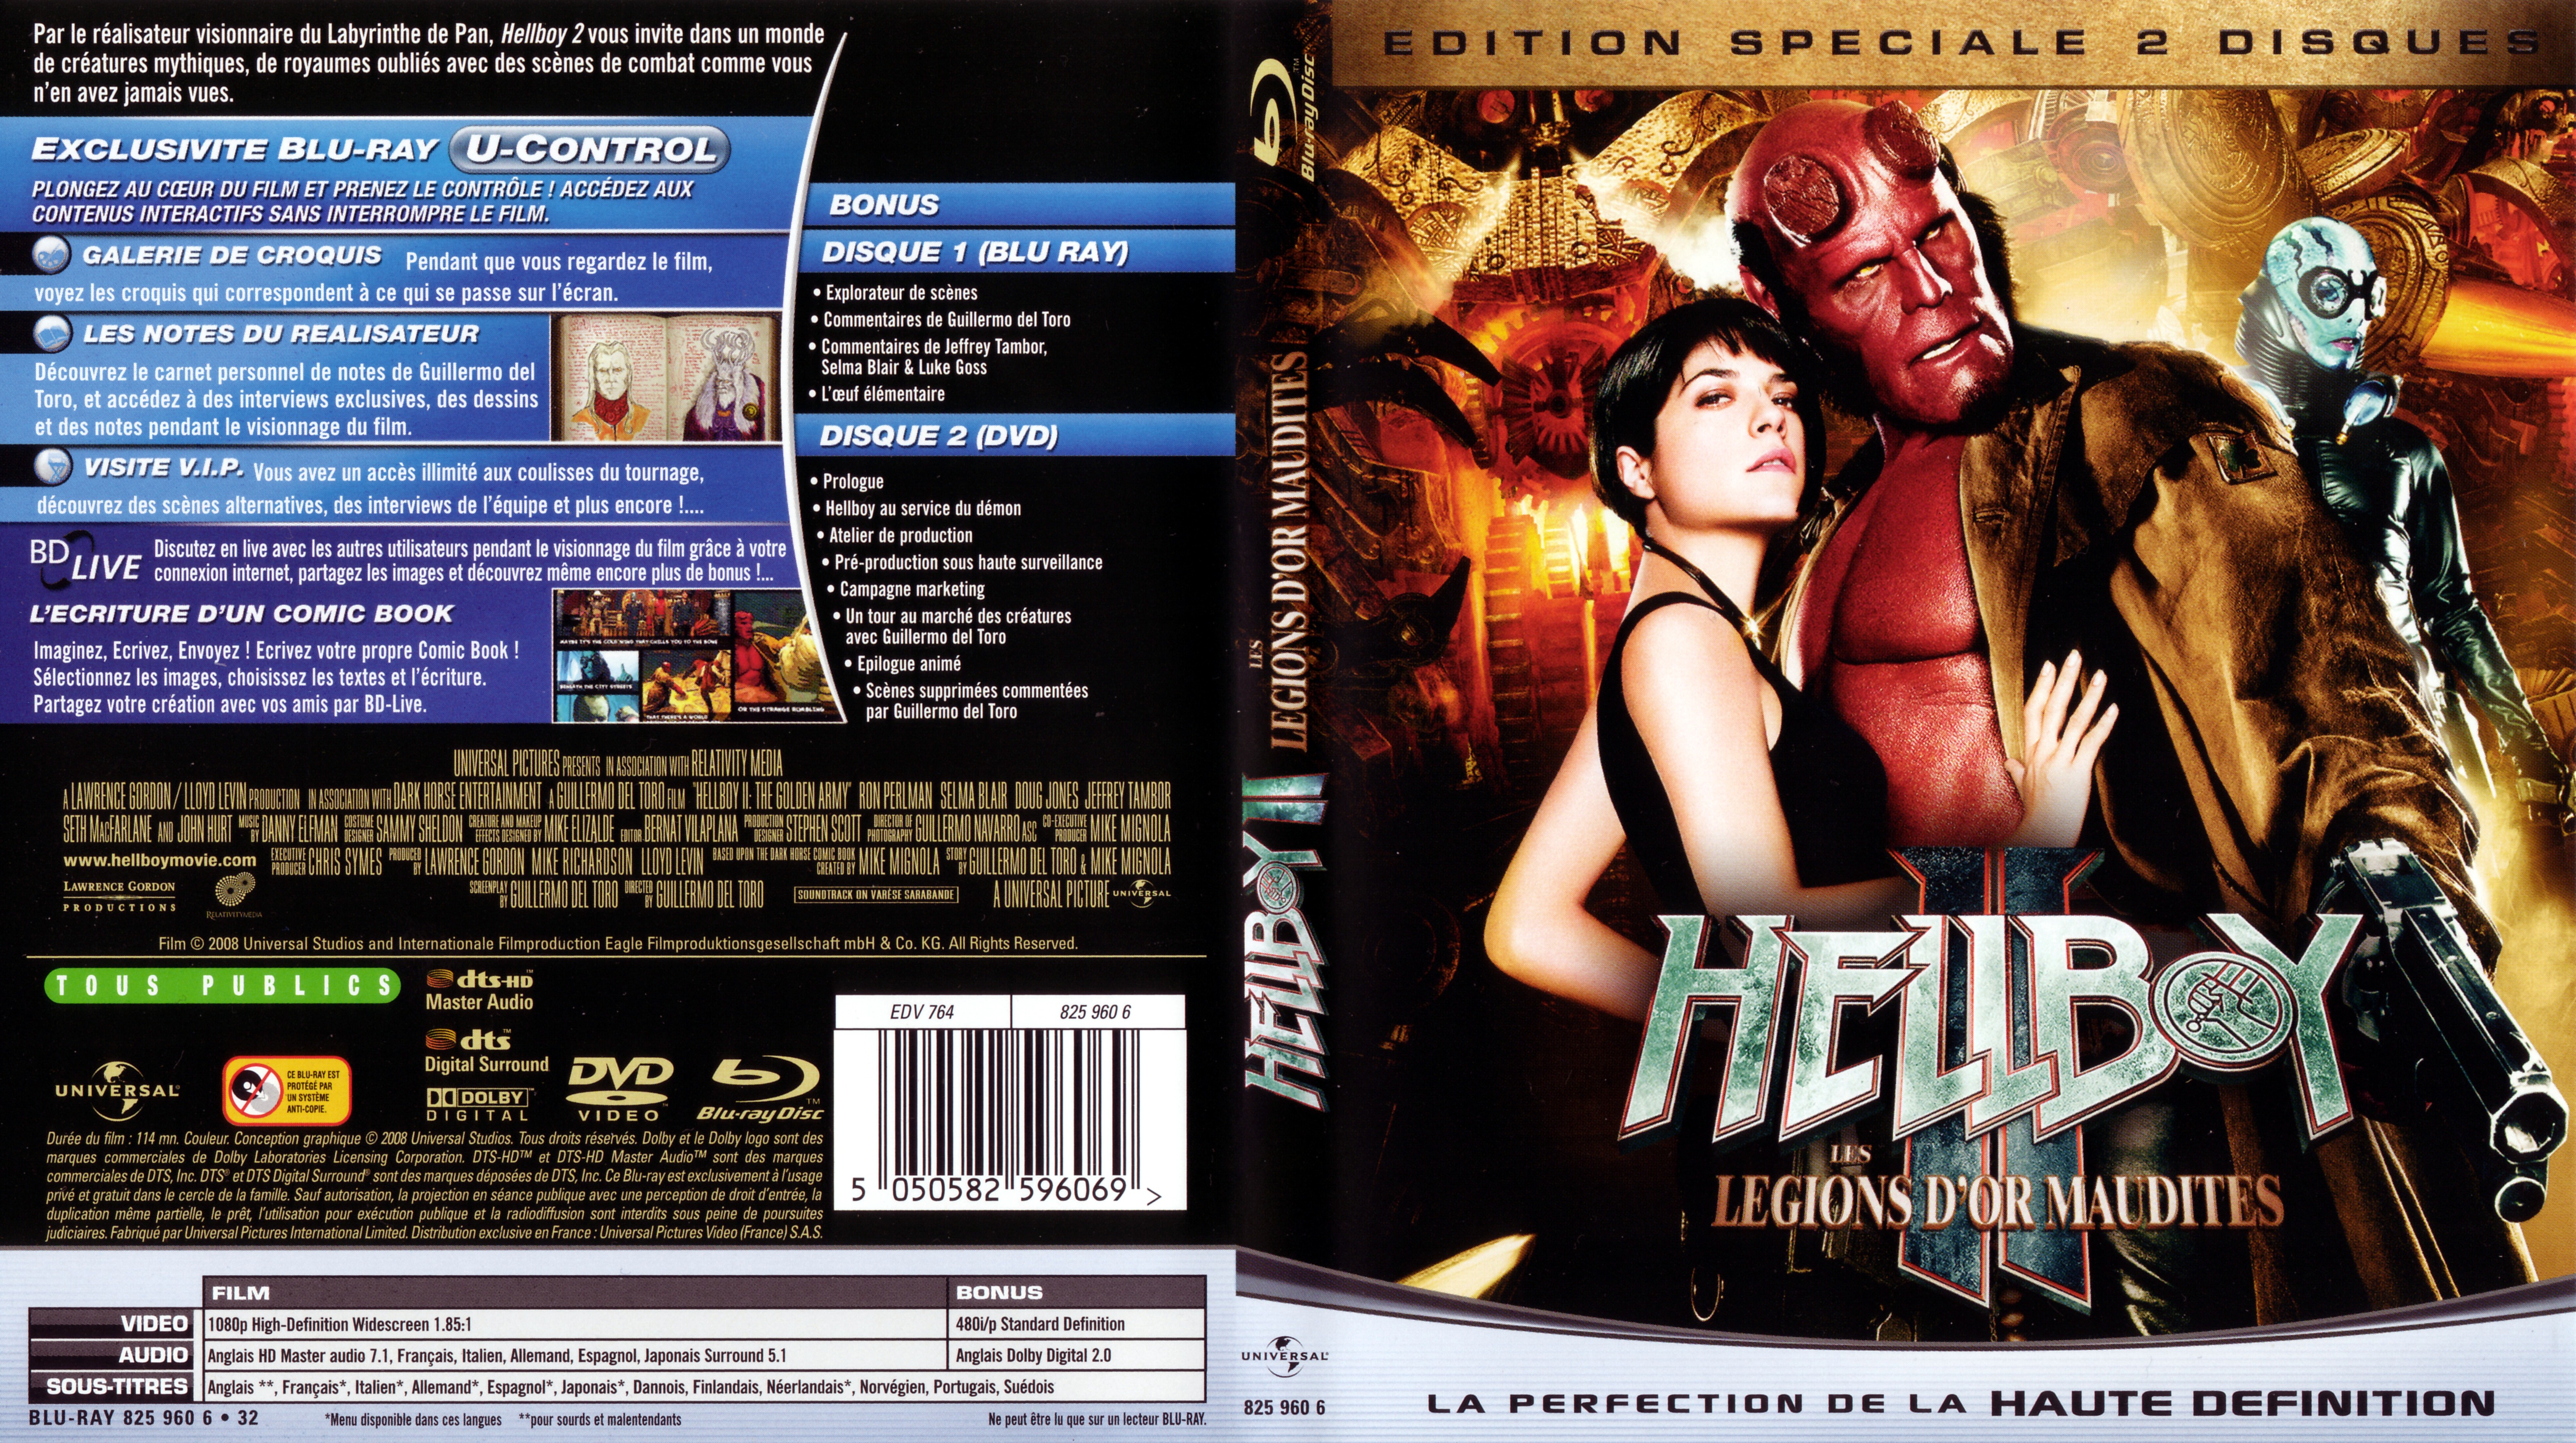 Jaquette DVD Hellboy 2 (BLU-RAY)